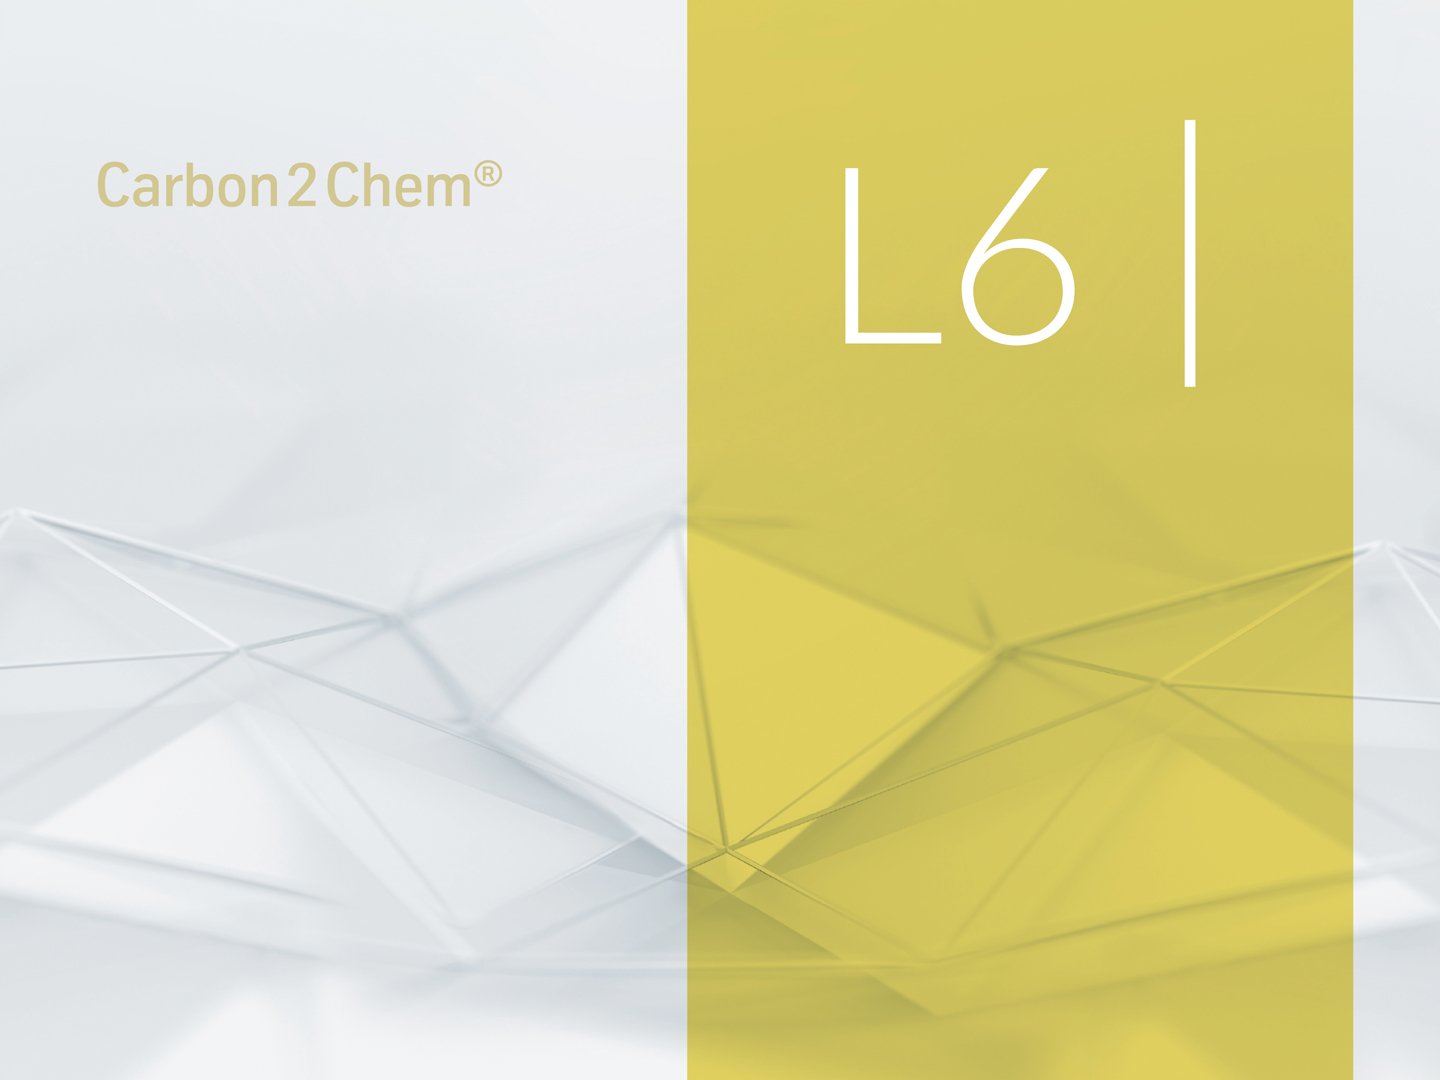 Carbon2Chem® Teilprojekt 6